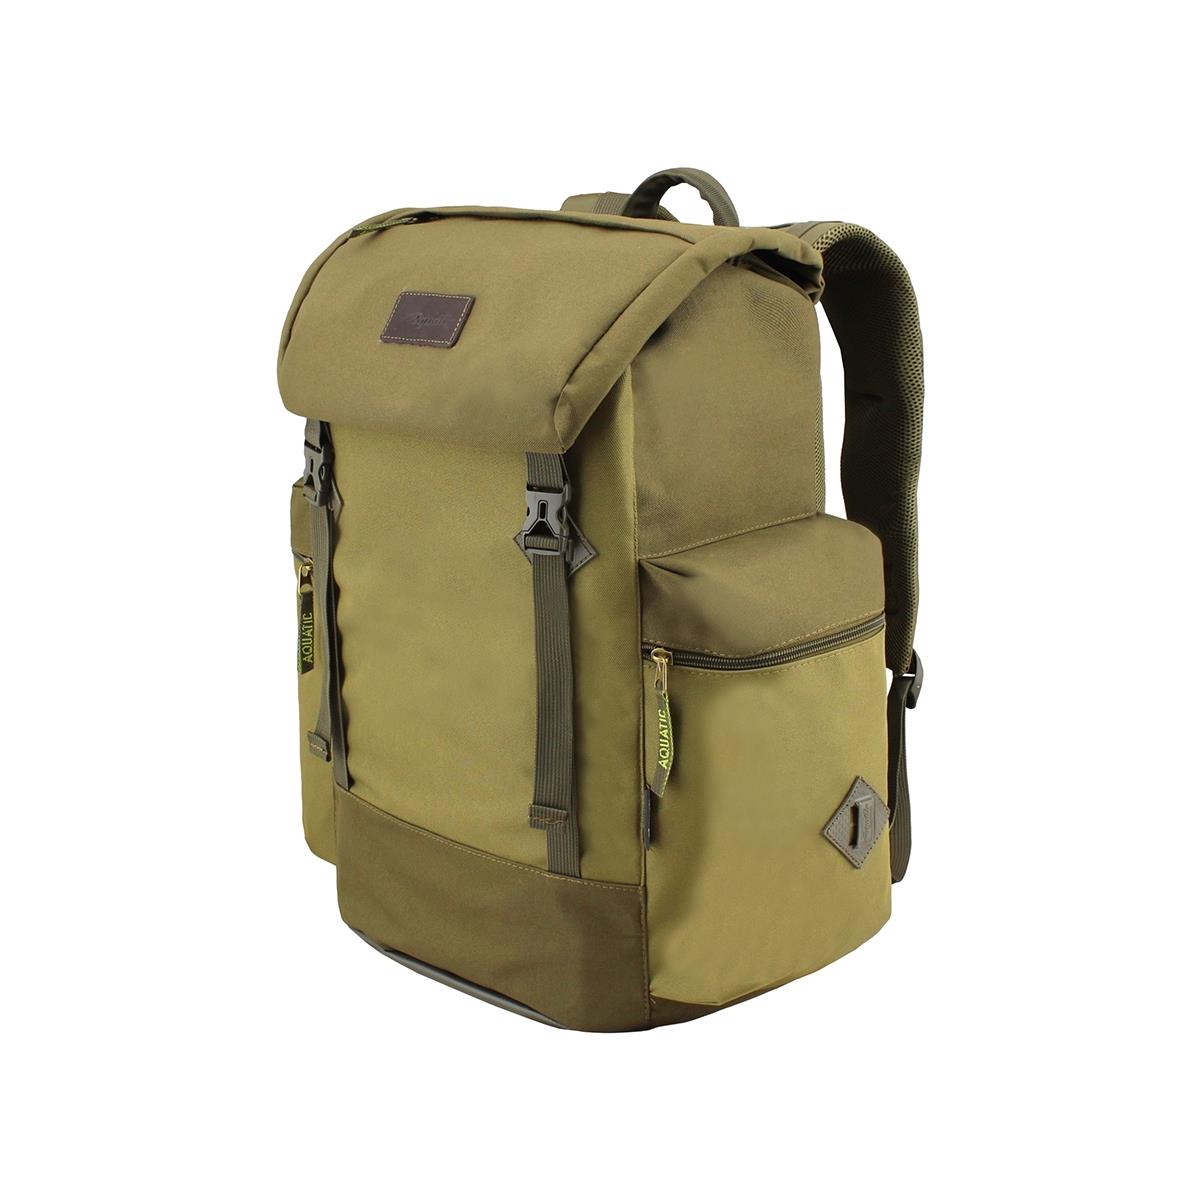 Рюкзак рыболовный РД-04 AQUATIC рюкзак со светоотражающим карманом микки маус